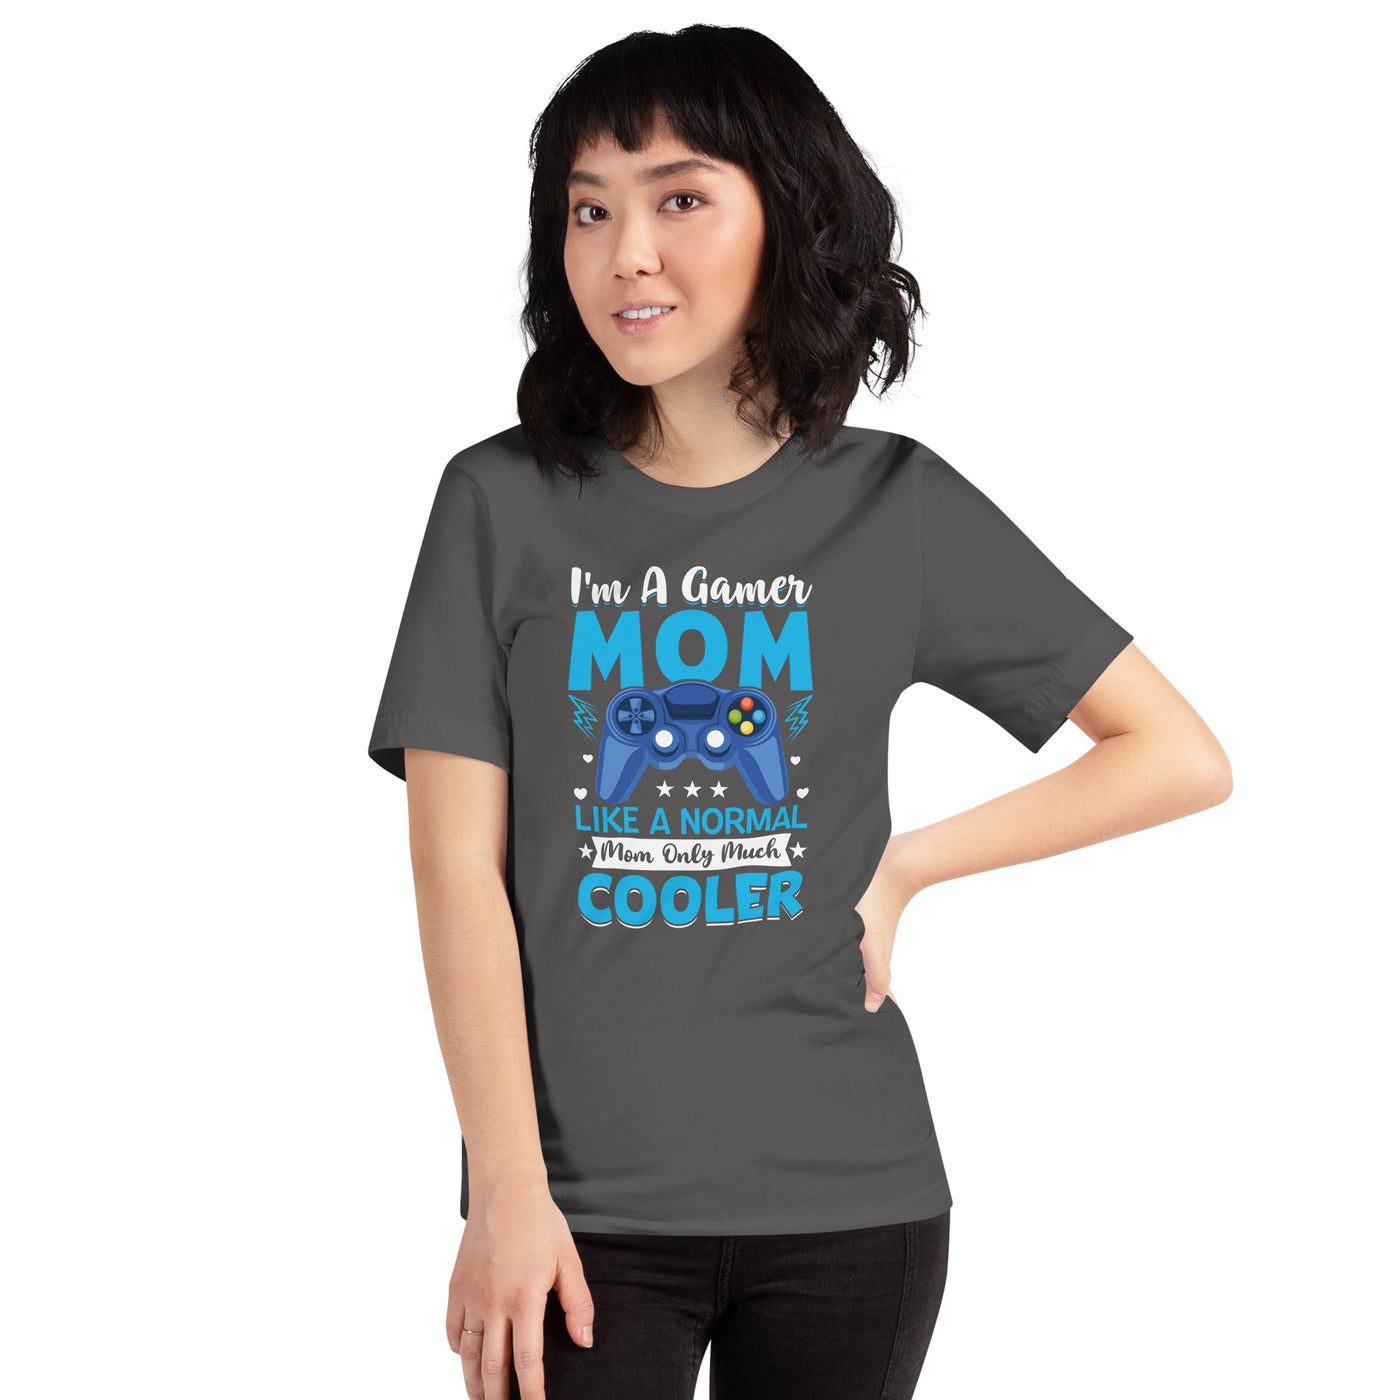 I am a Gamer Mom - Unisex t-shirt